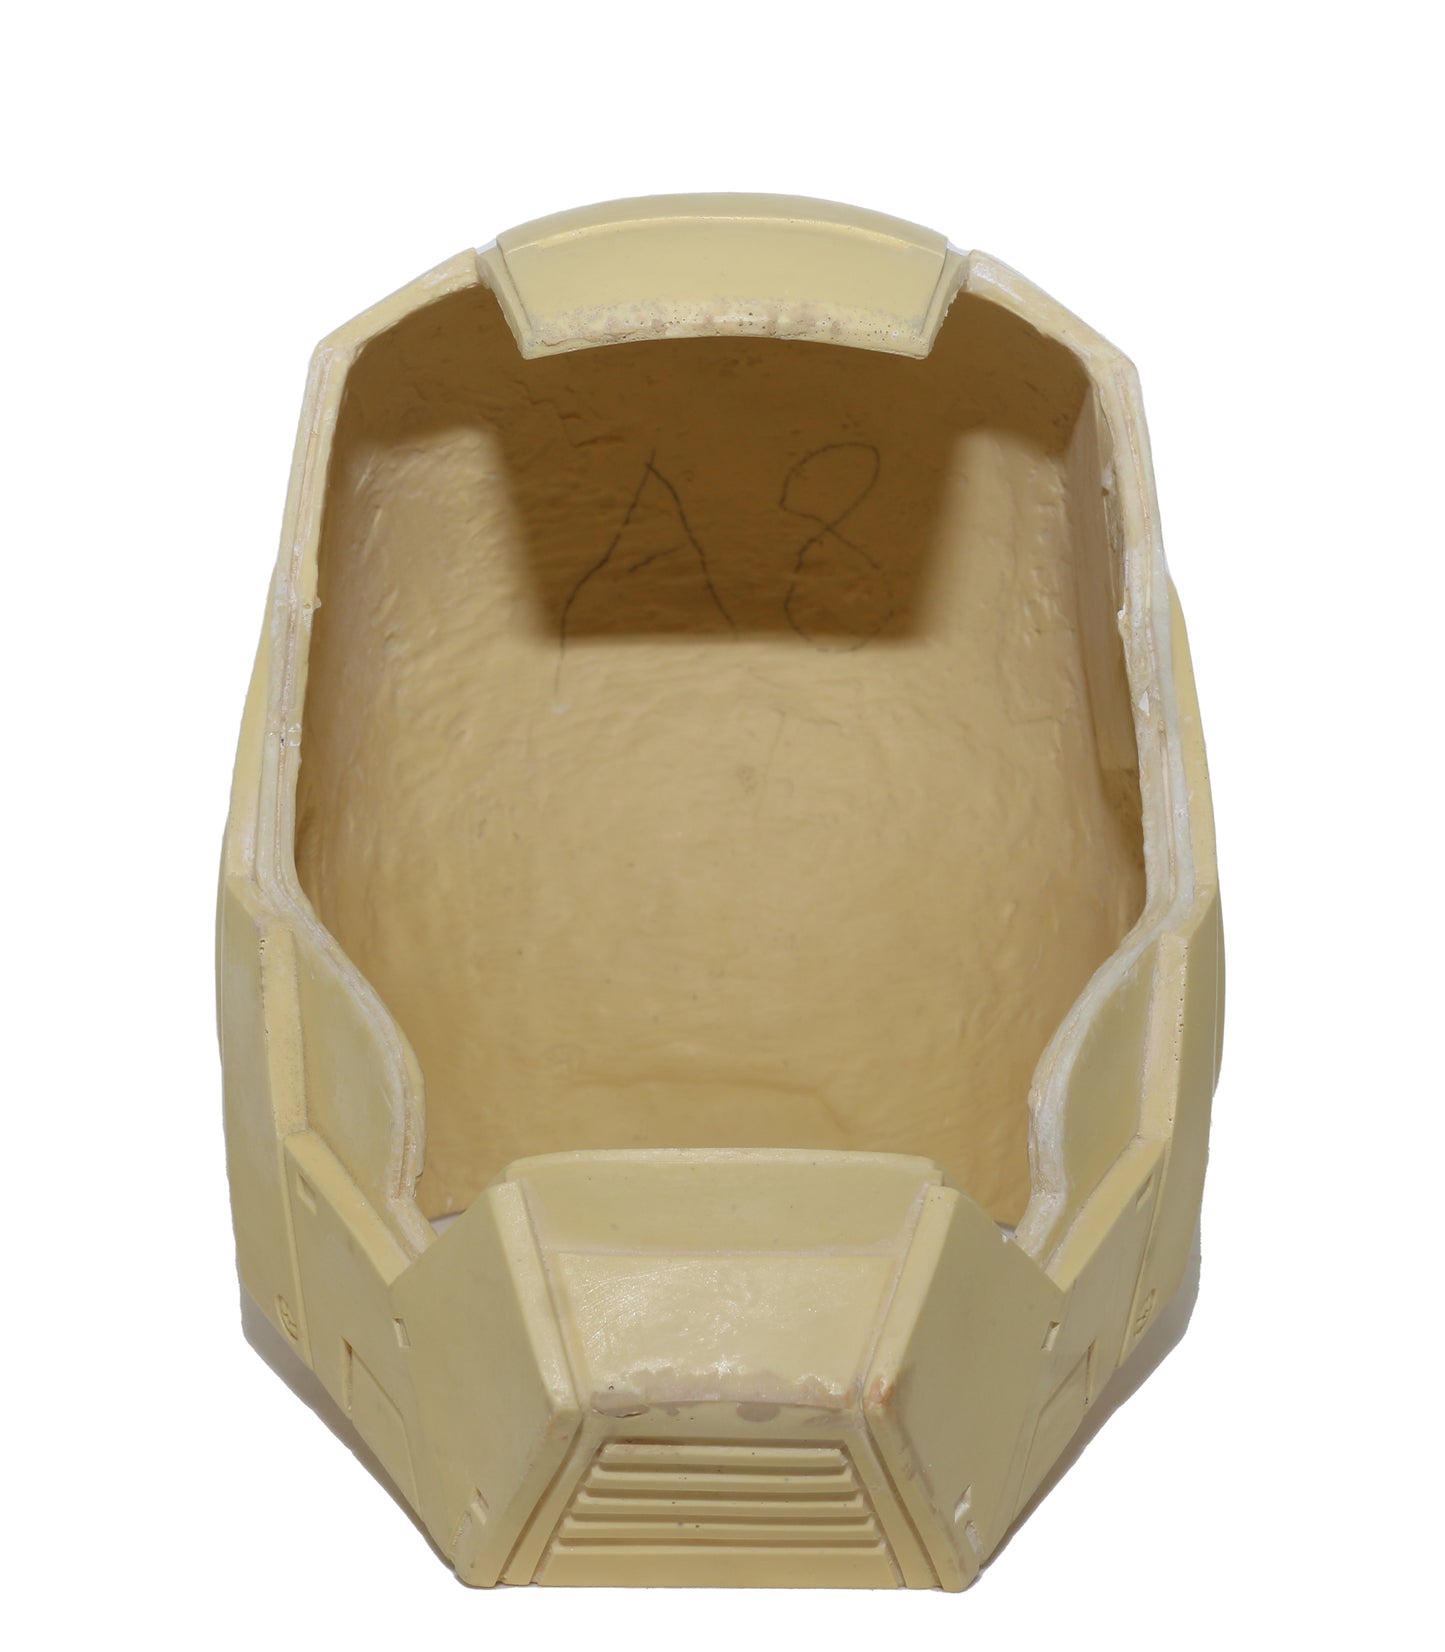 
                  
                    Iron Man 2 Production Made War Machine Prototype Helmet Design from SFX Artist - 2010
                  
                